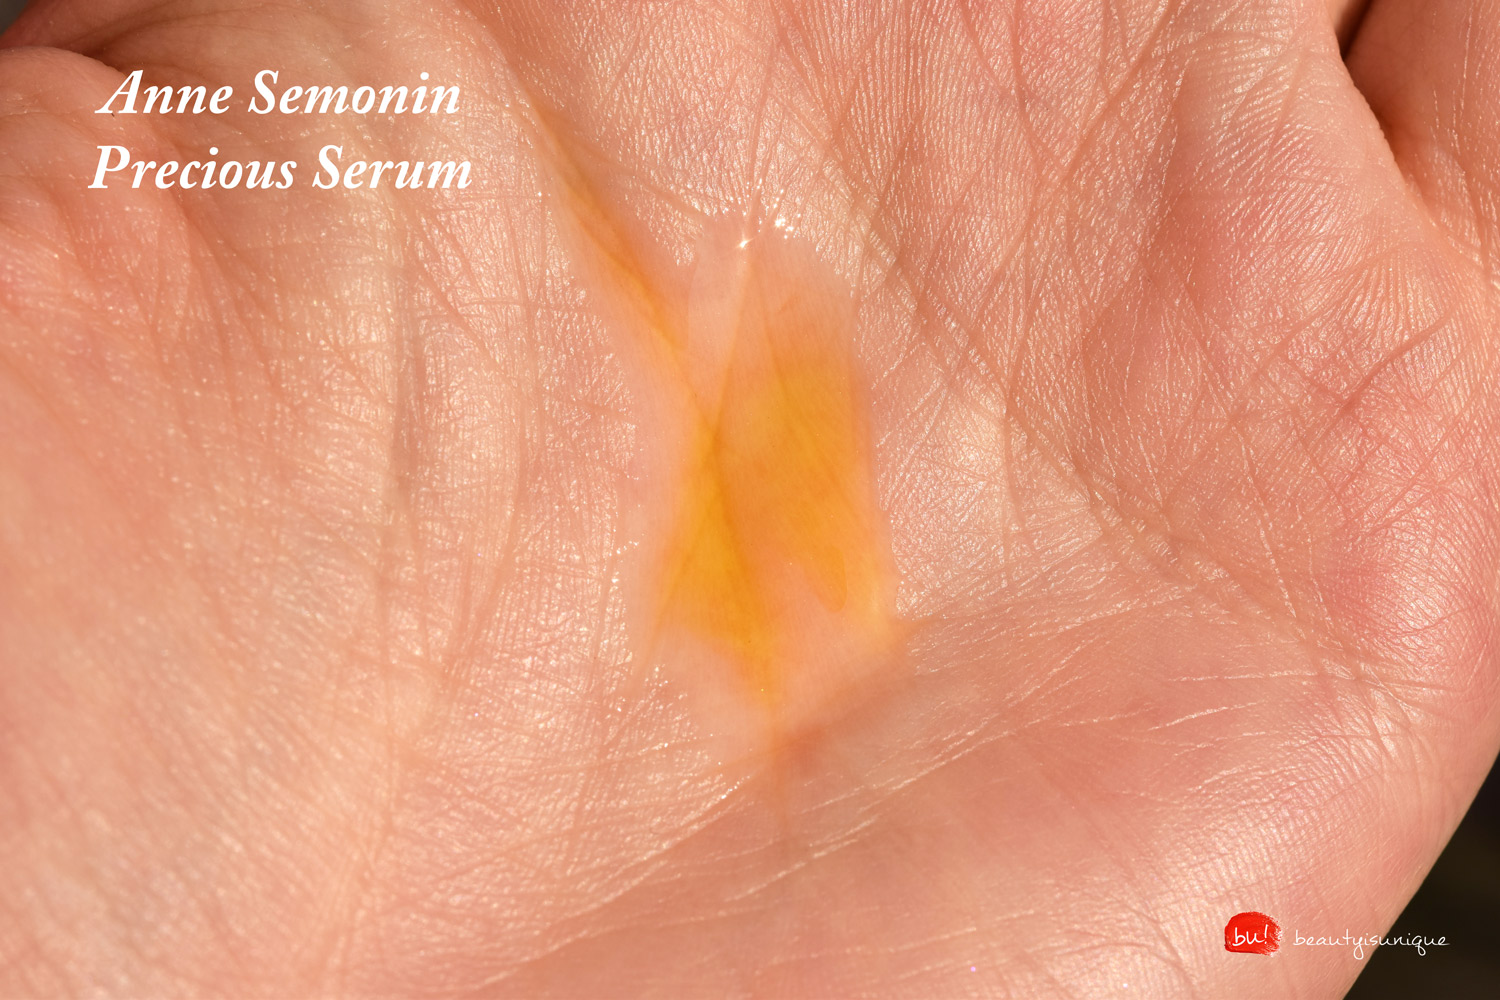 Anne-semonin-precious-serum-swatches